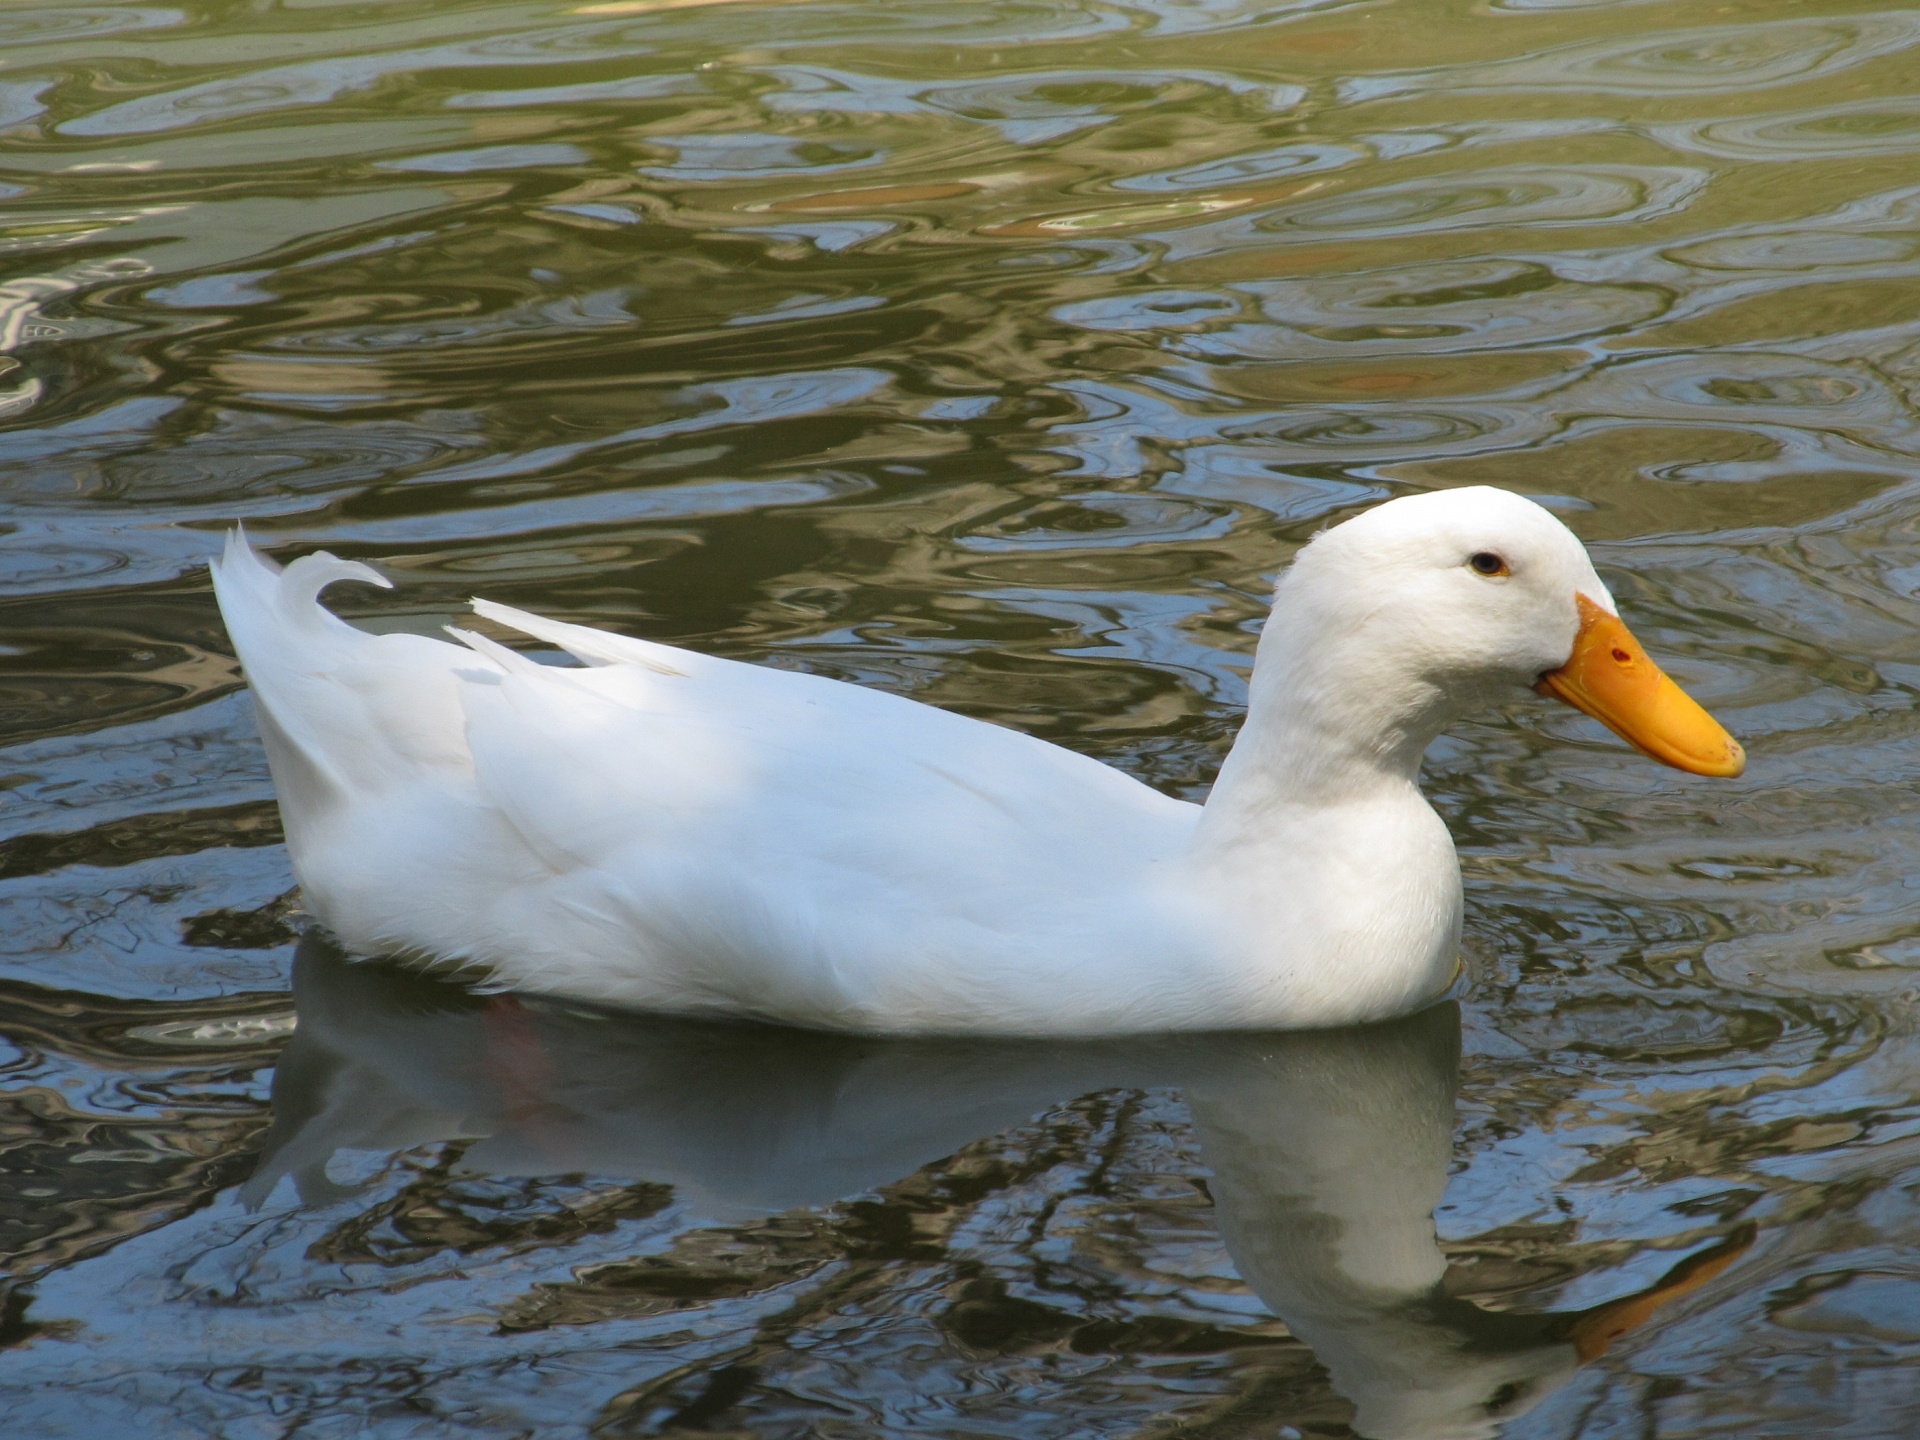 White pekin duck swimming peacefully on a lake.